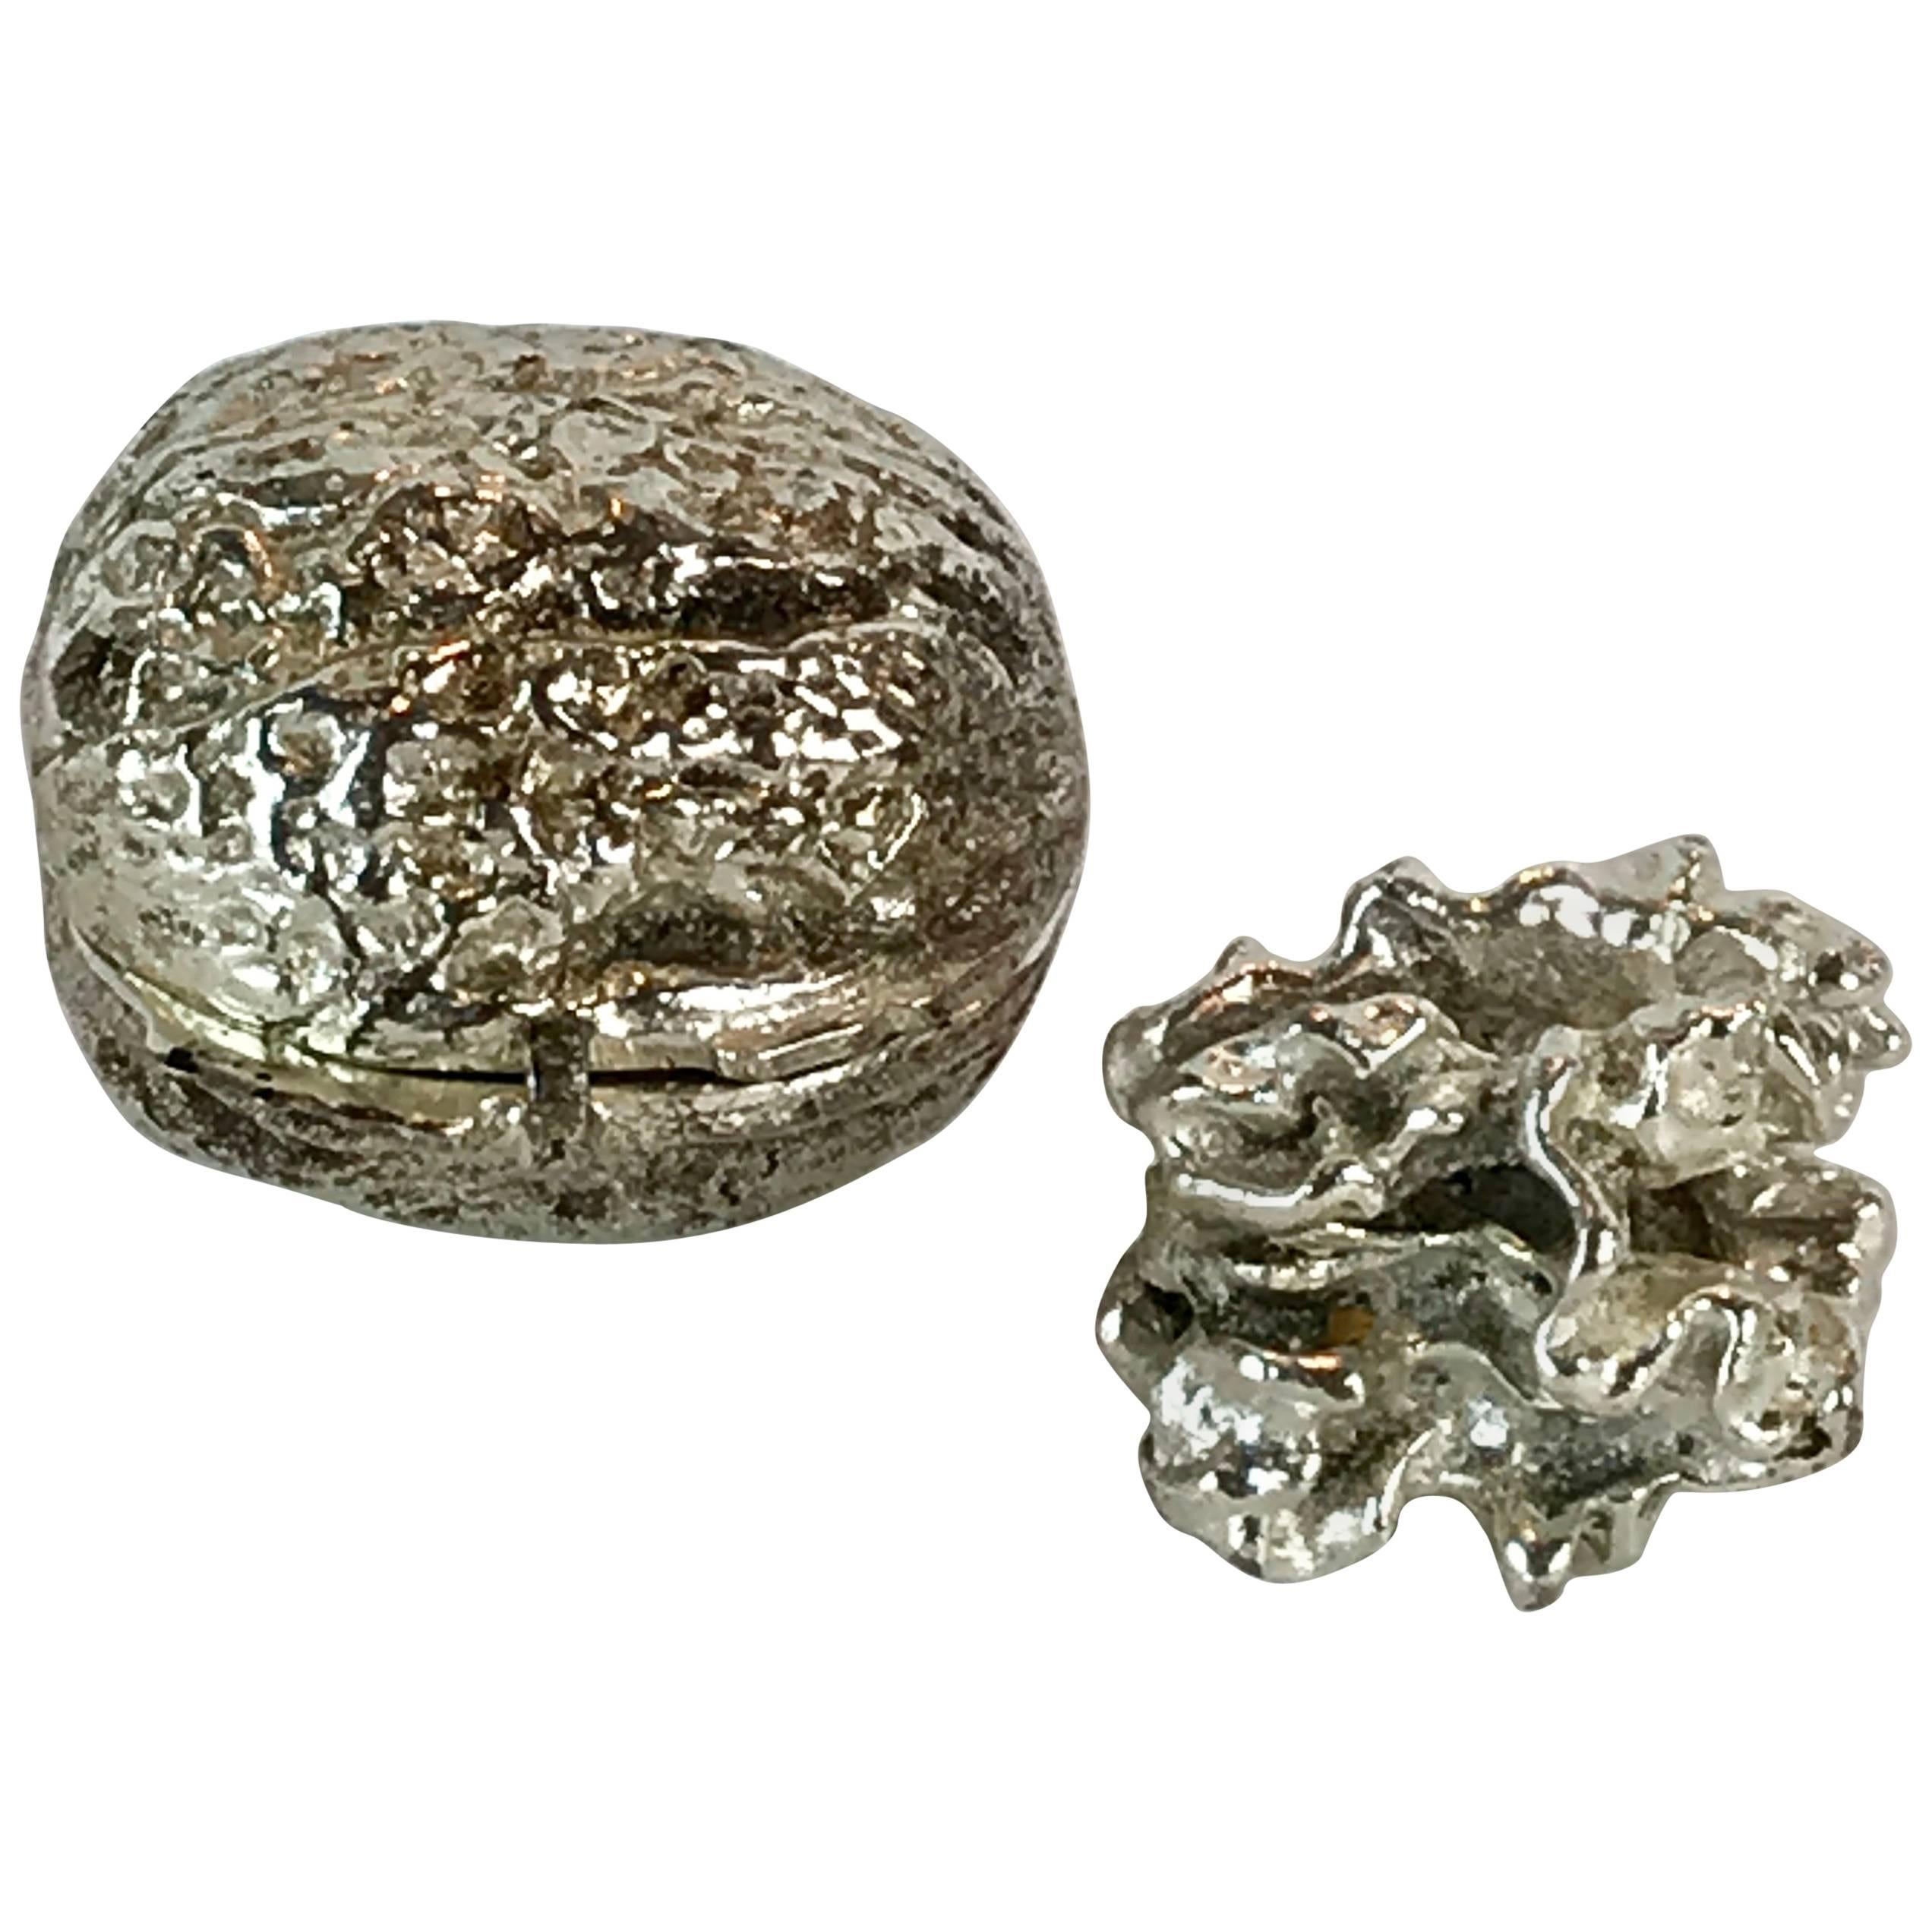 Silver Plated Bronze Sculpture of a Walnut